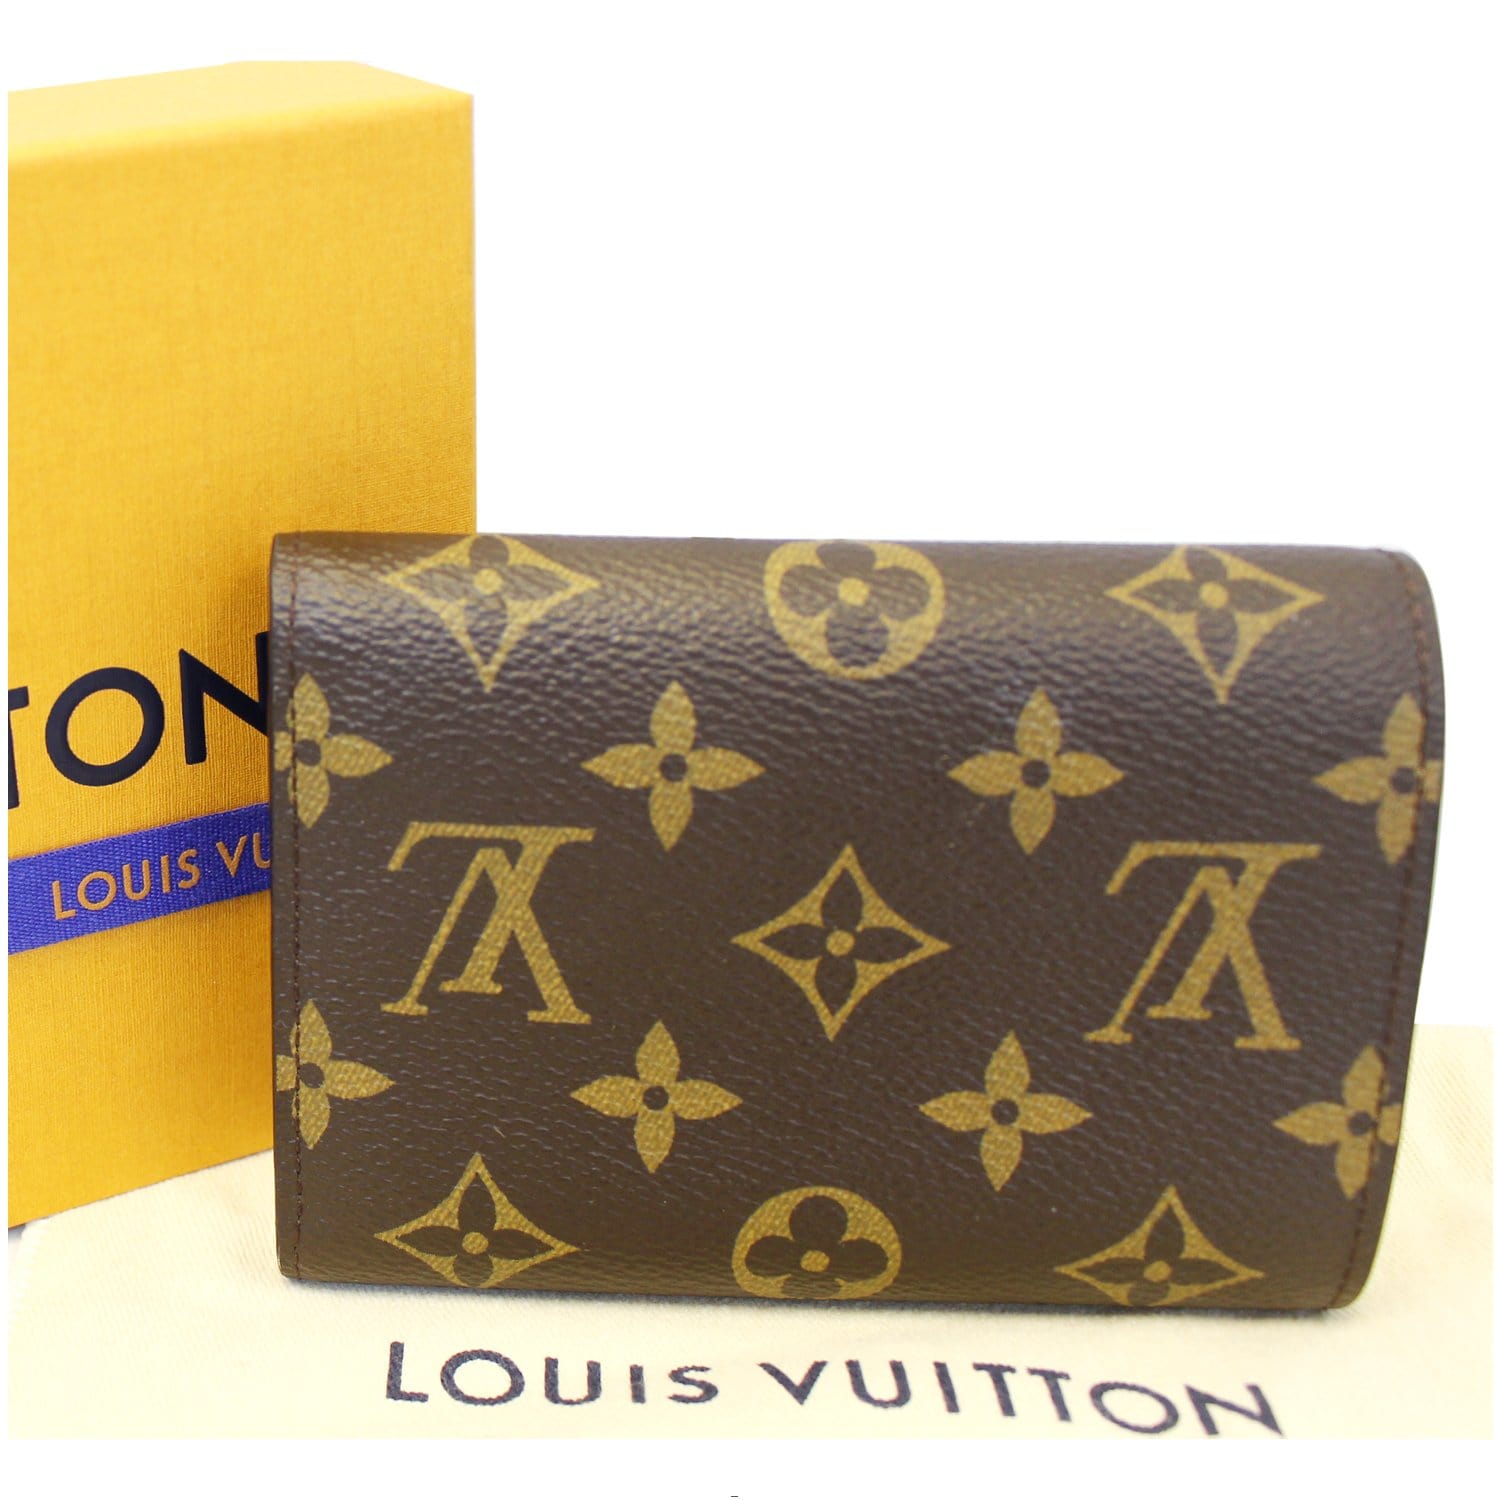 LOUIS VUITTON Monogram Flower Lock Compact Wallet Black 896921